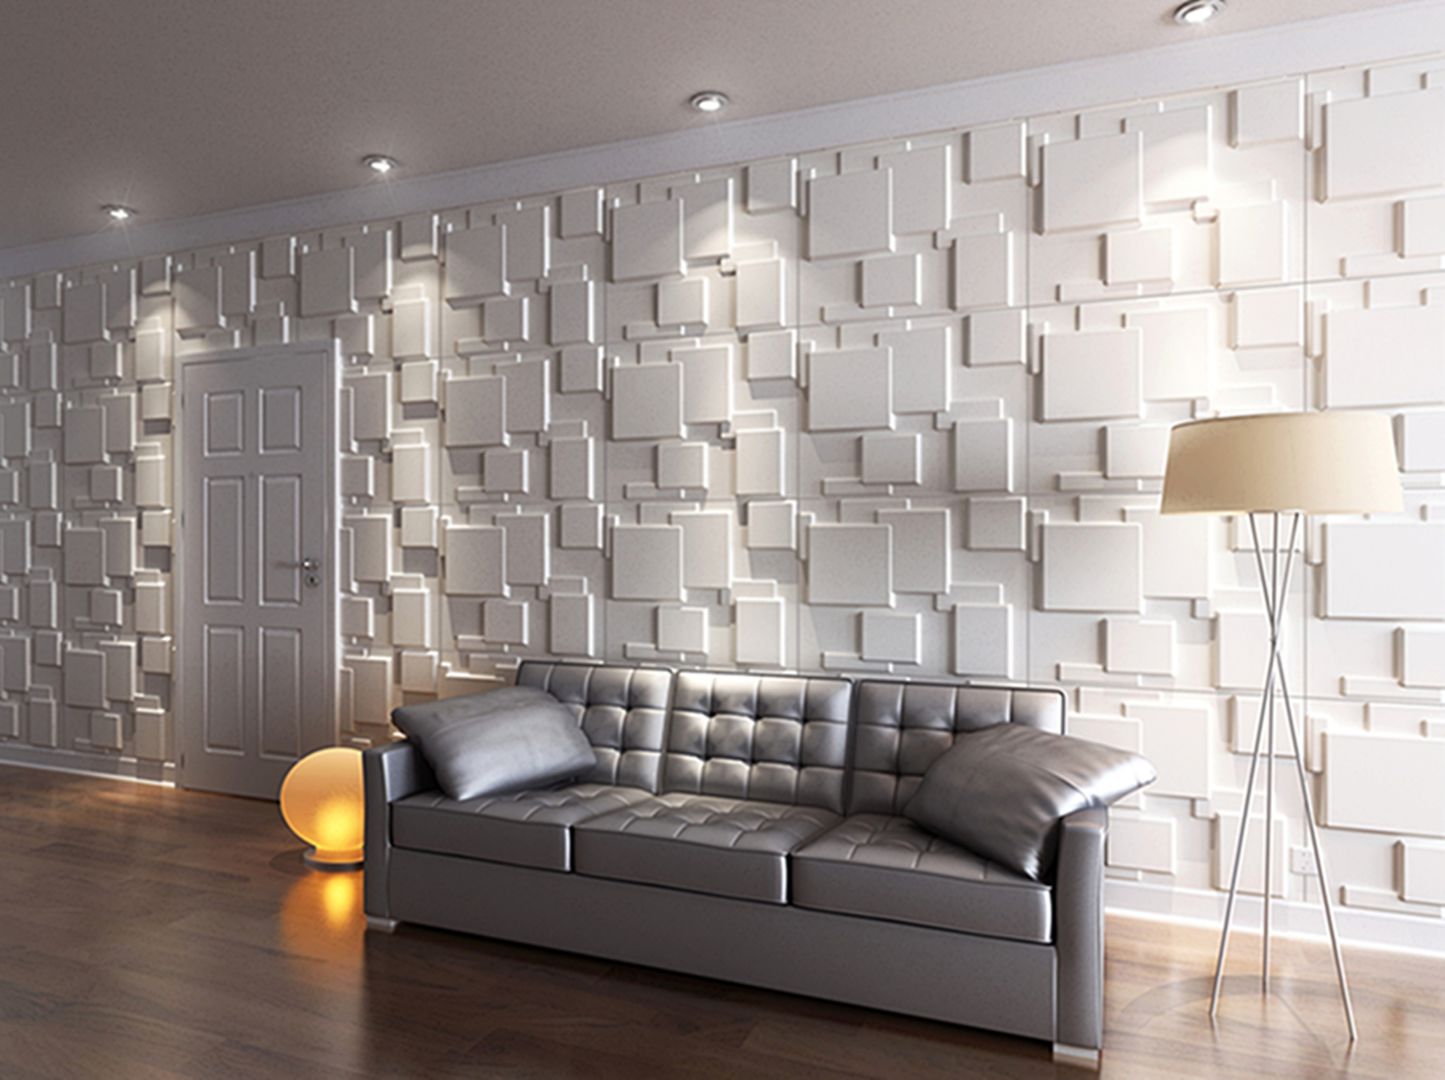 3D Wall Panels, Twinx Interiors Twinx Interiors Powierzchnie handlowe Hotele